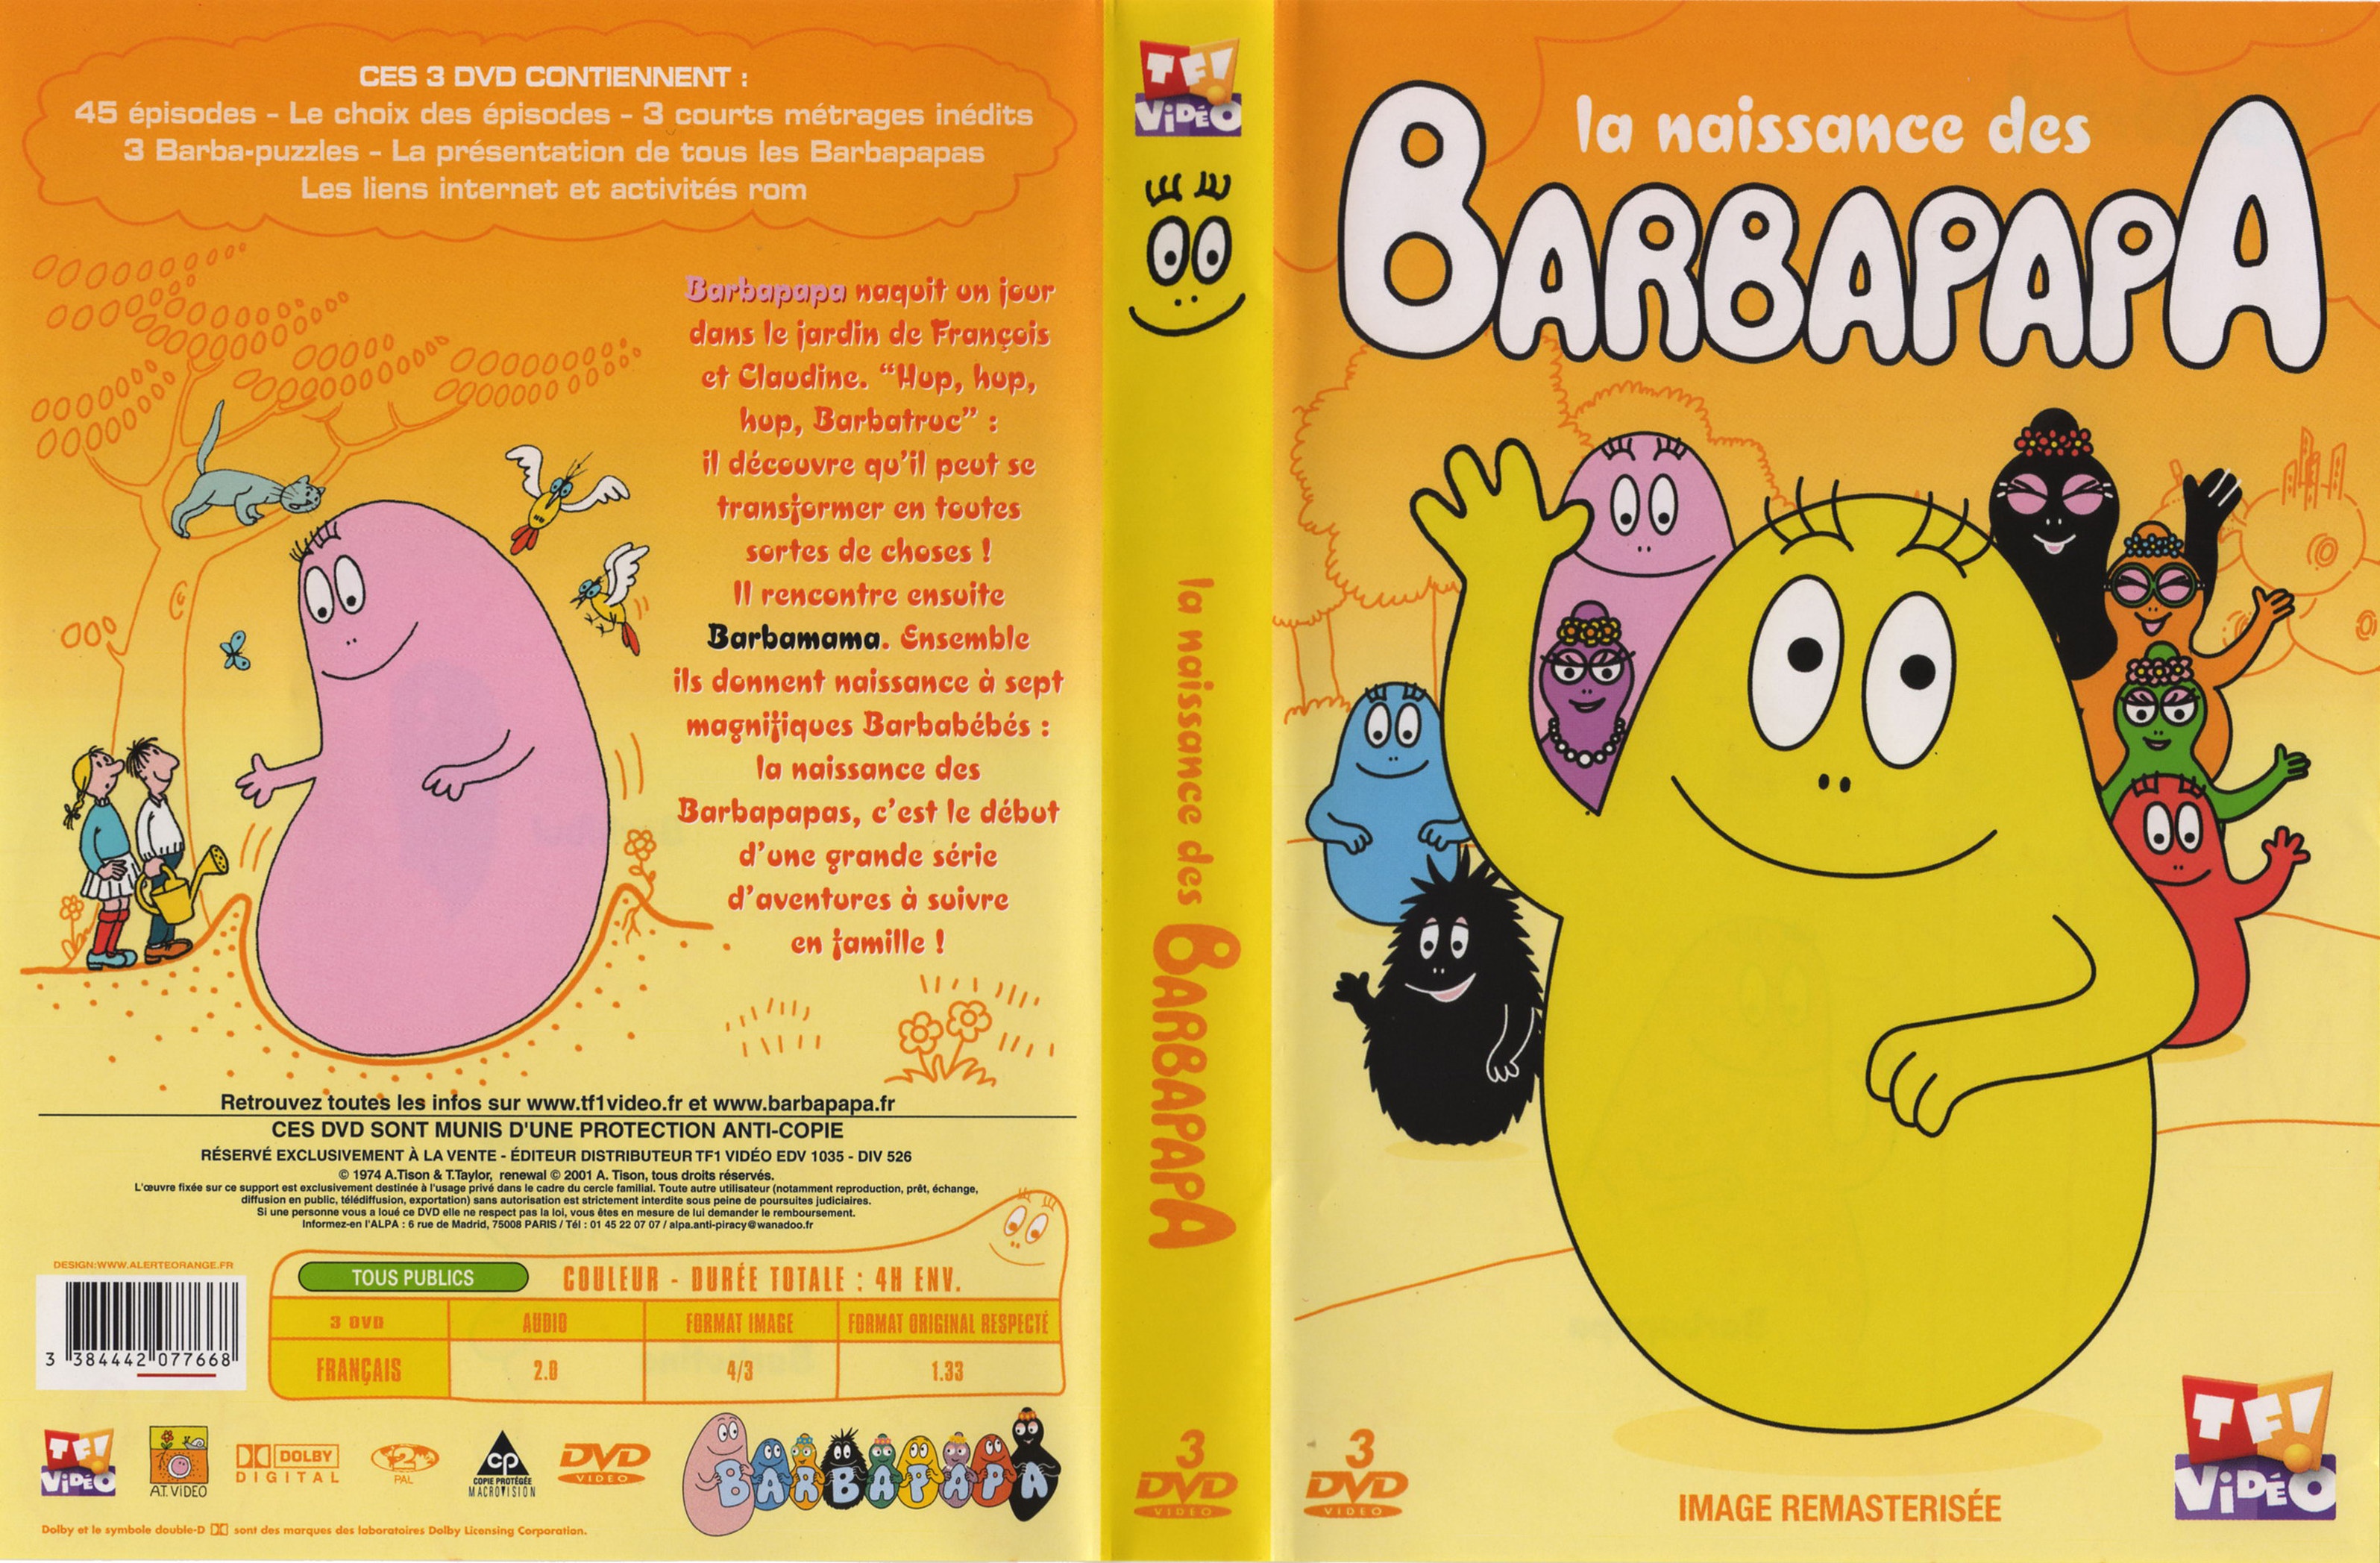 Jaquette DVD La naissance des barbapapa v2